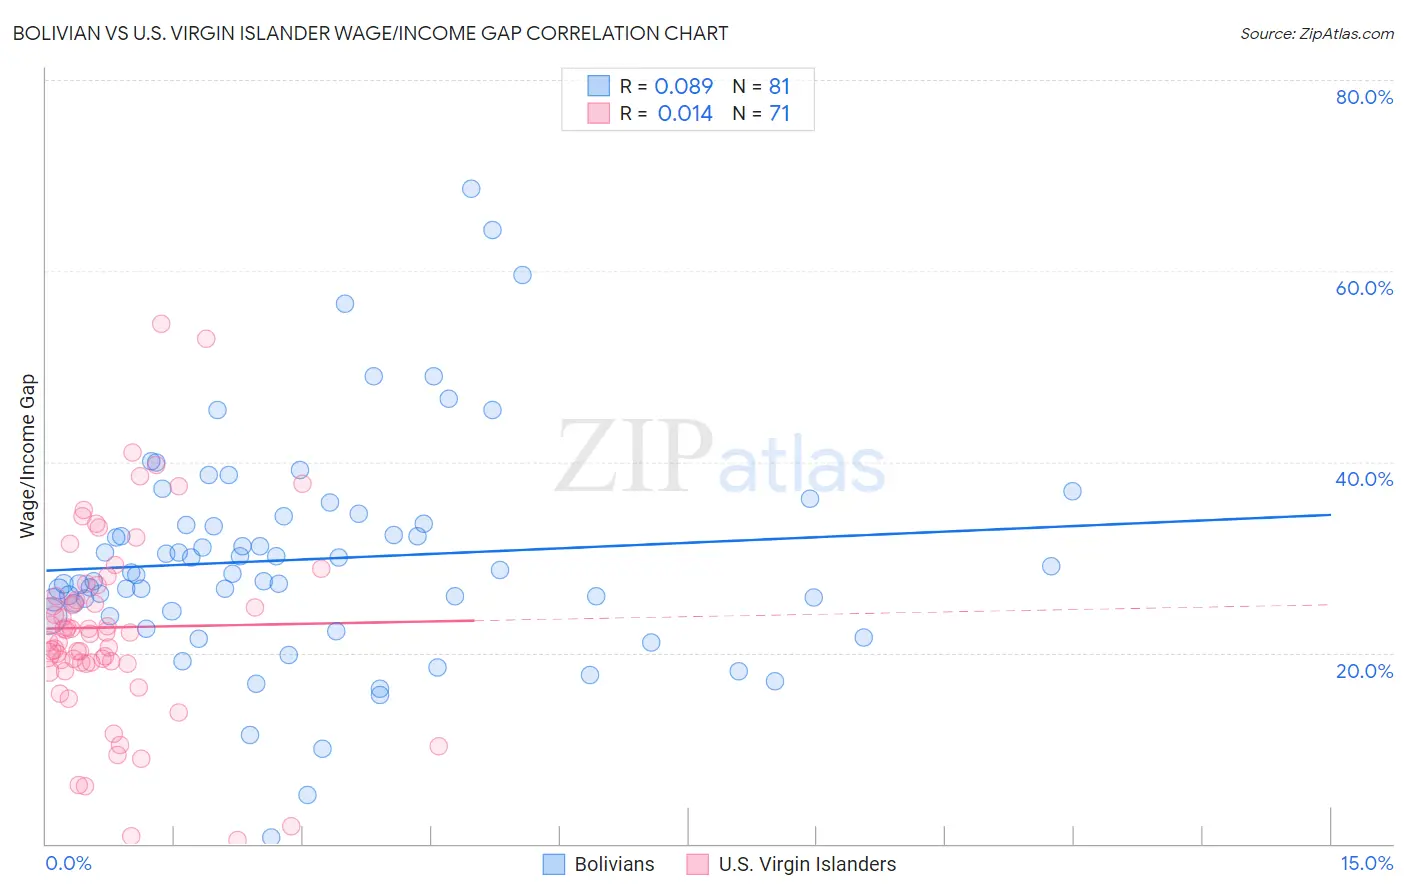 Bolivian vs U.S. Virgin Islander Wage/Income Gap